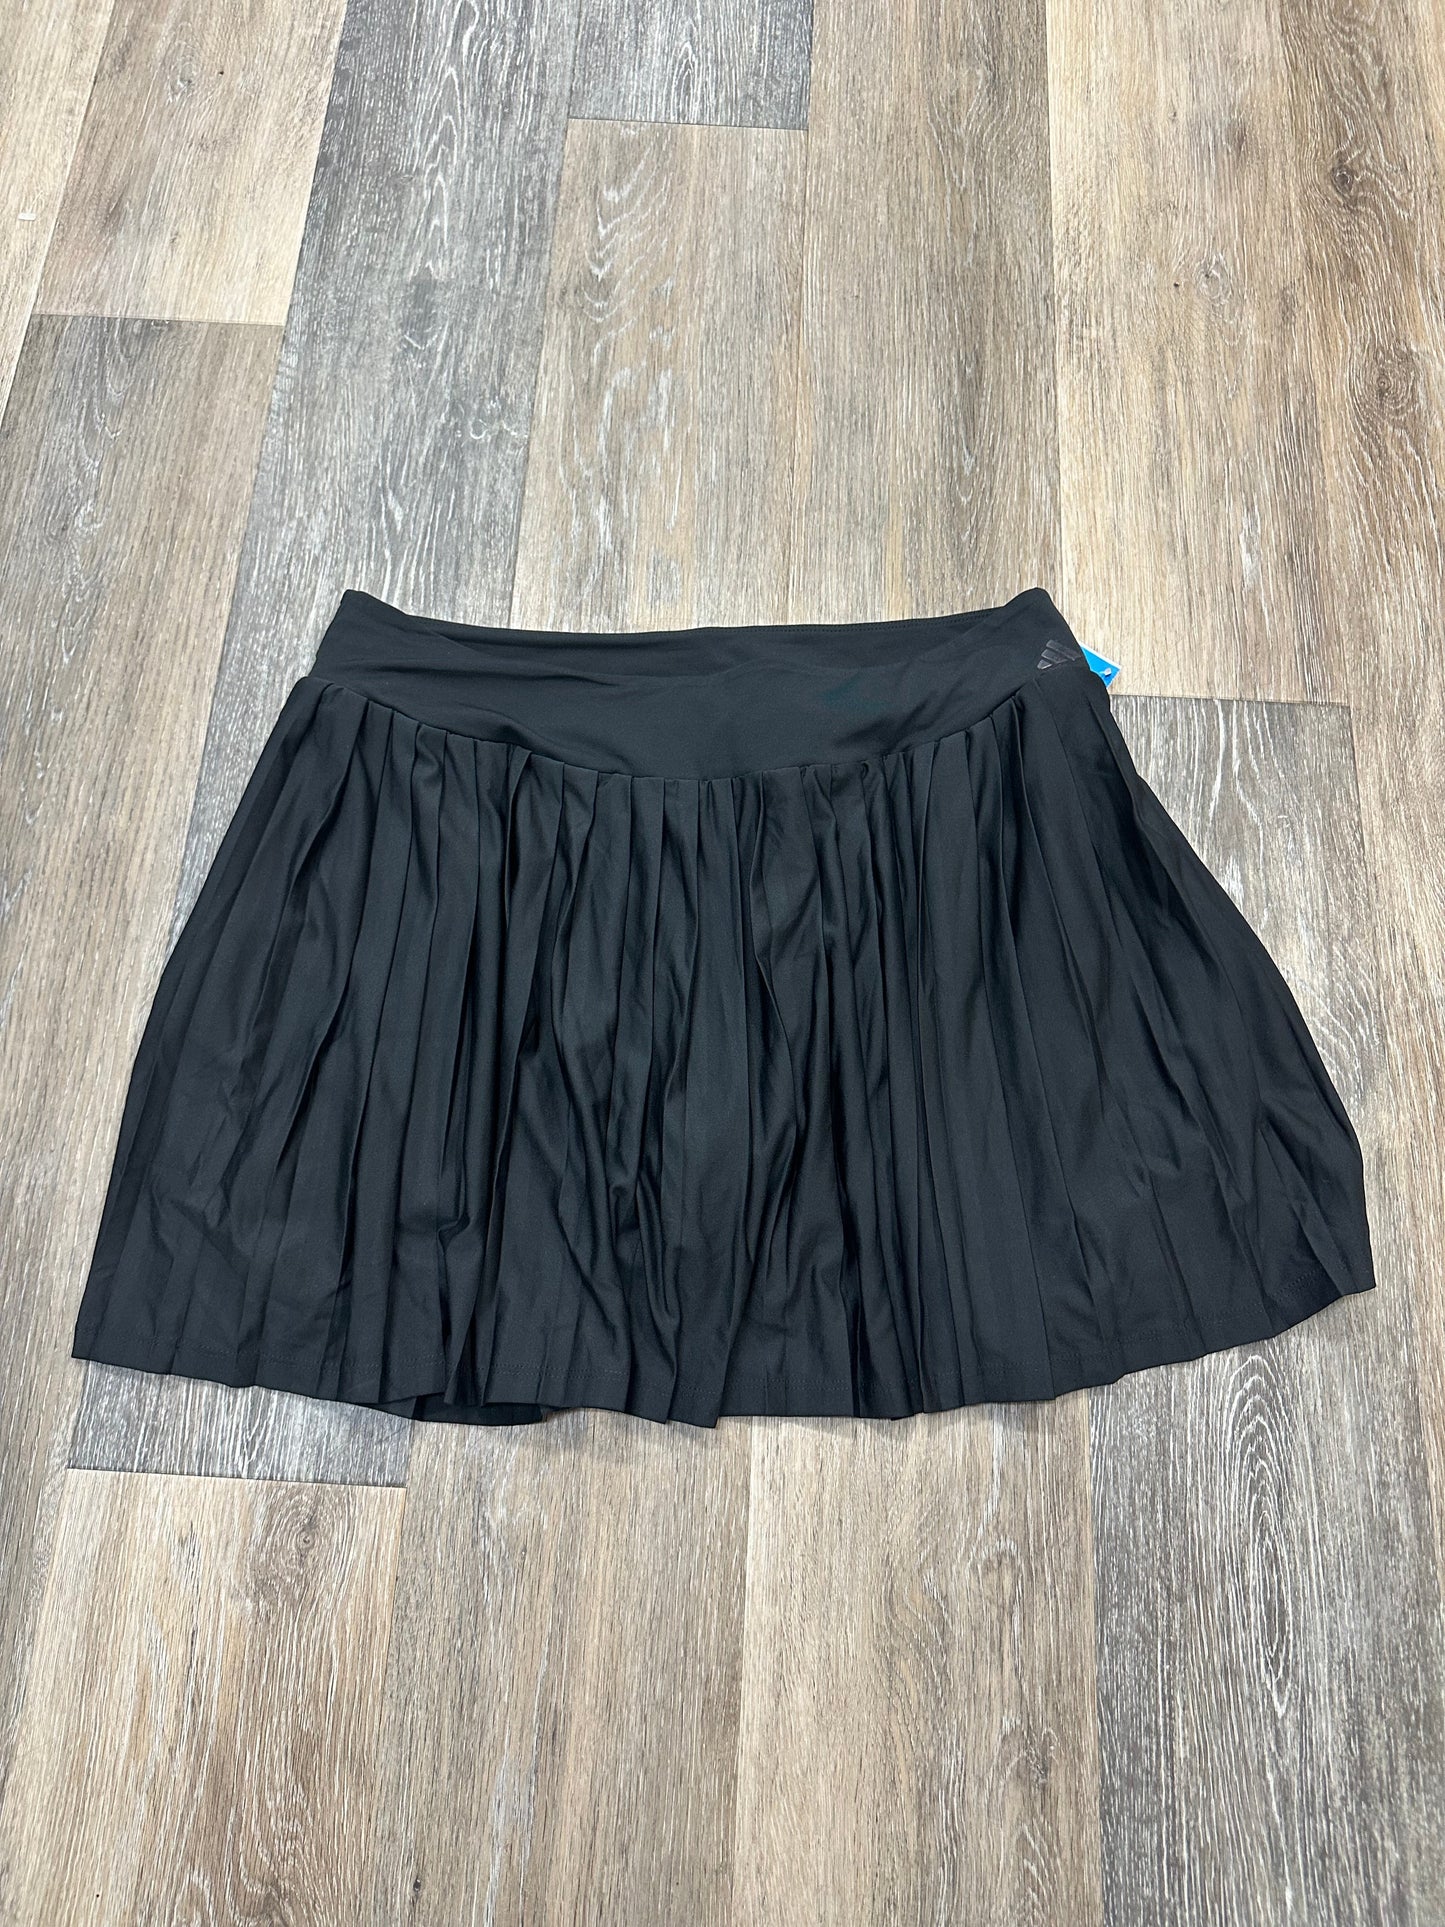 Black Athletic Skirt Adidas, Size M